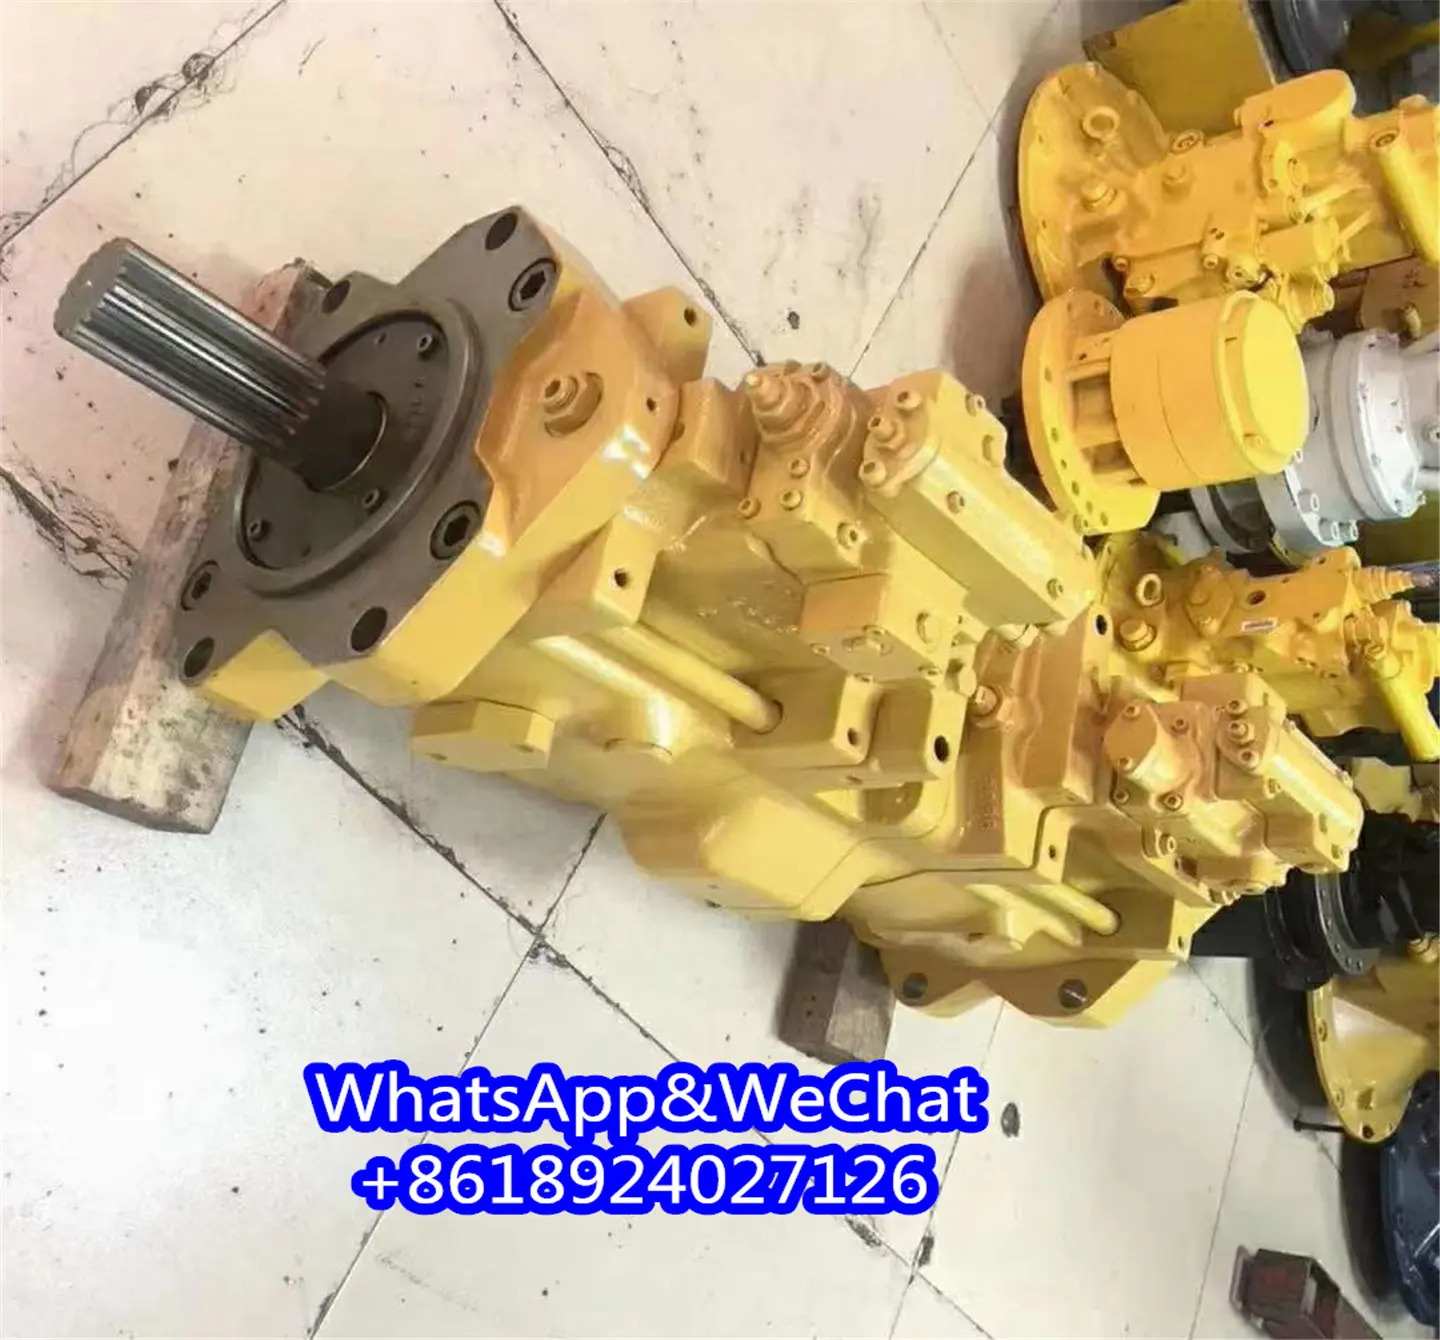 065-2975 Main Pump 161-5854 Hydraulic Pump 164-5486 Parts 166-9231 Piston 085-9988 Motor 287-3601